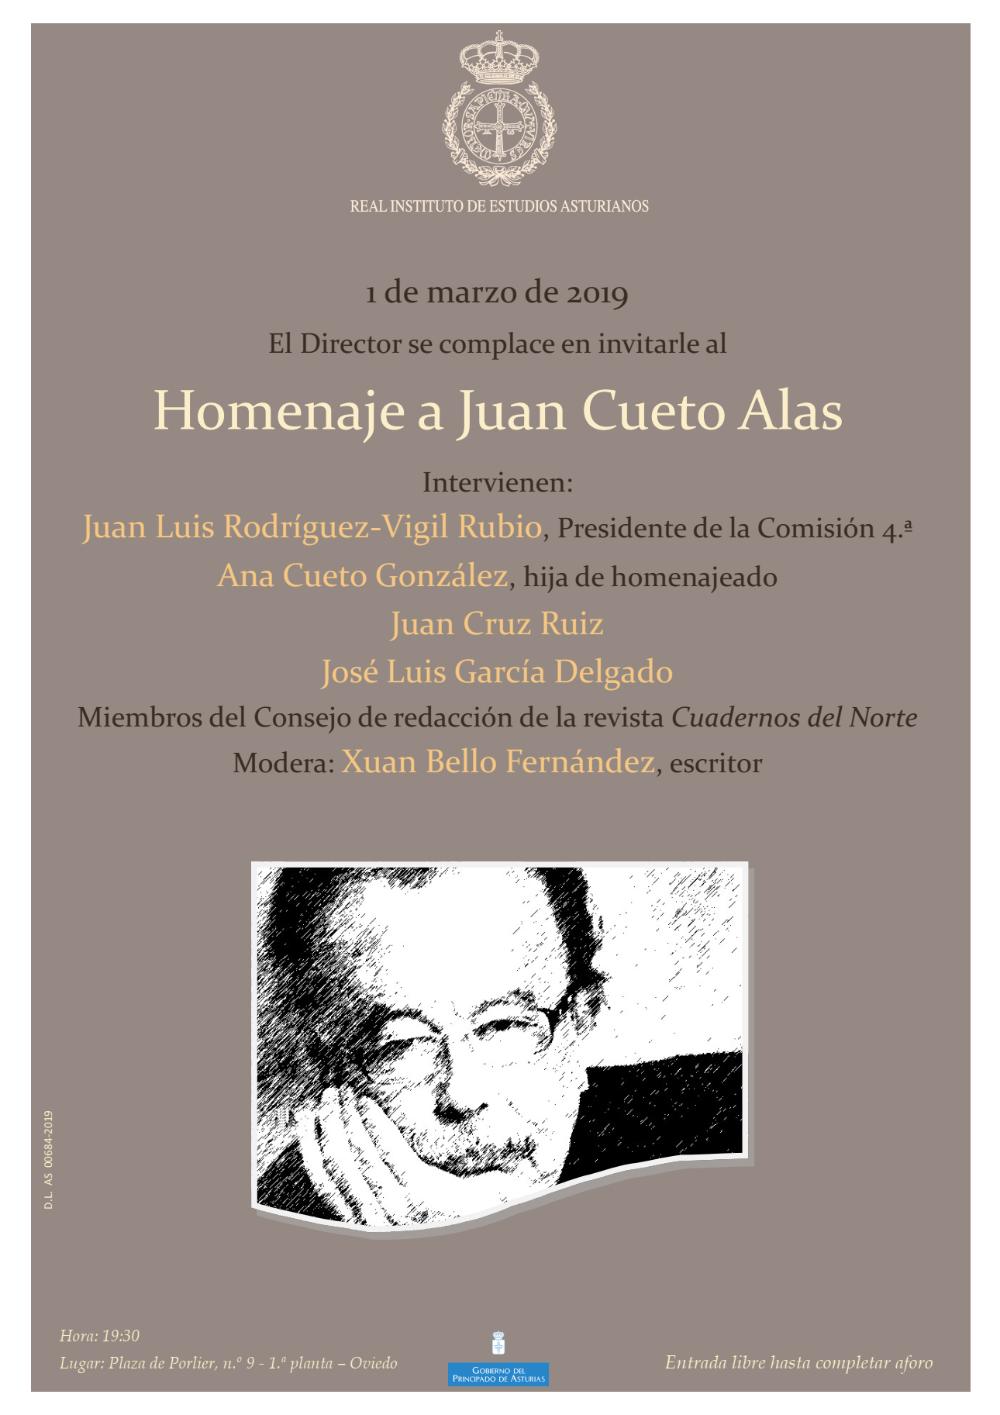 Imagen - Homenaje a Juan Cueto Alas